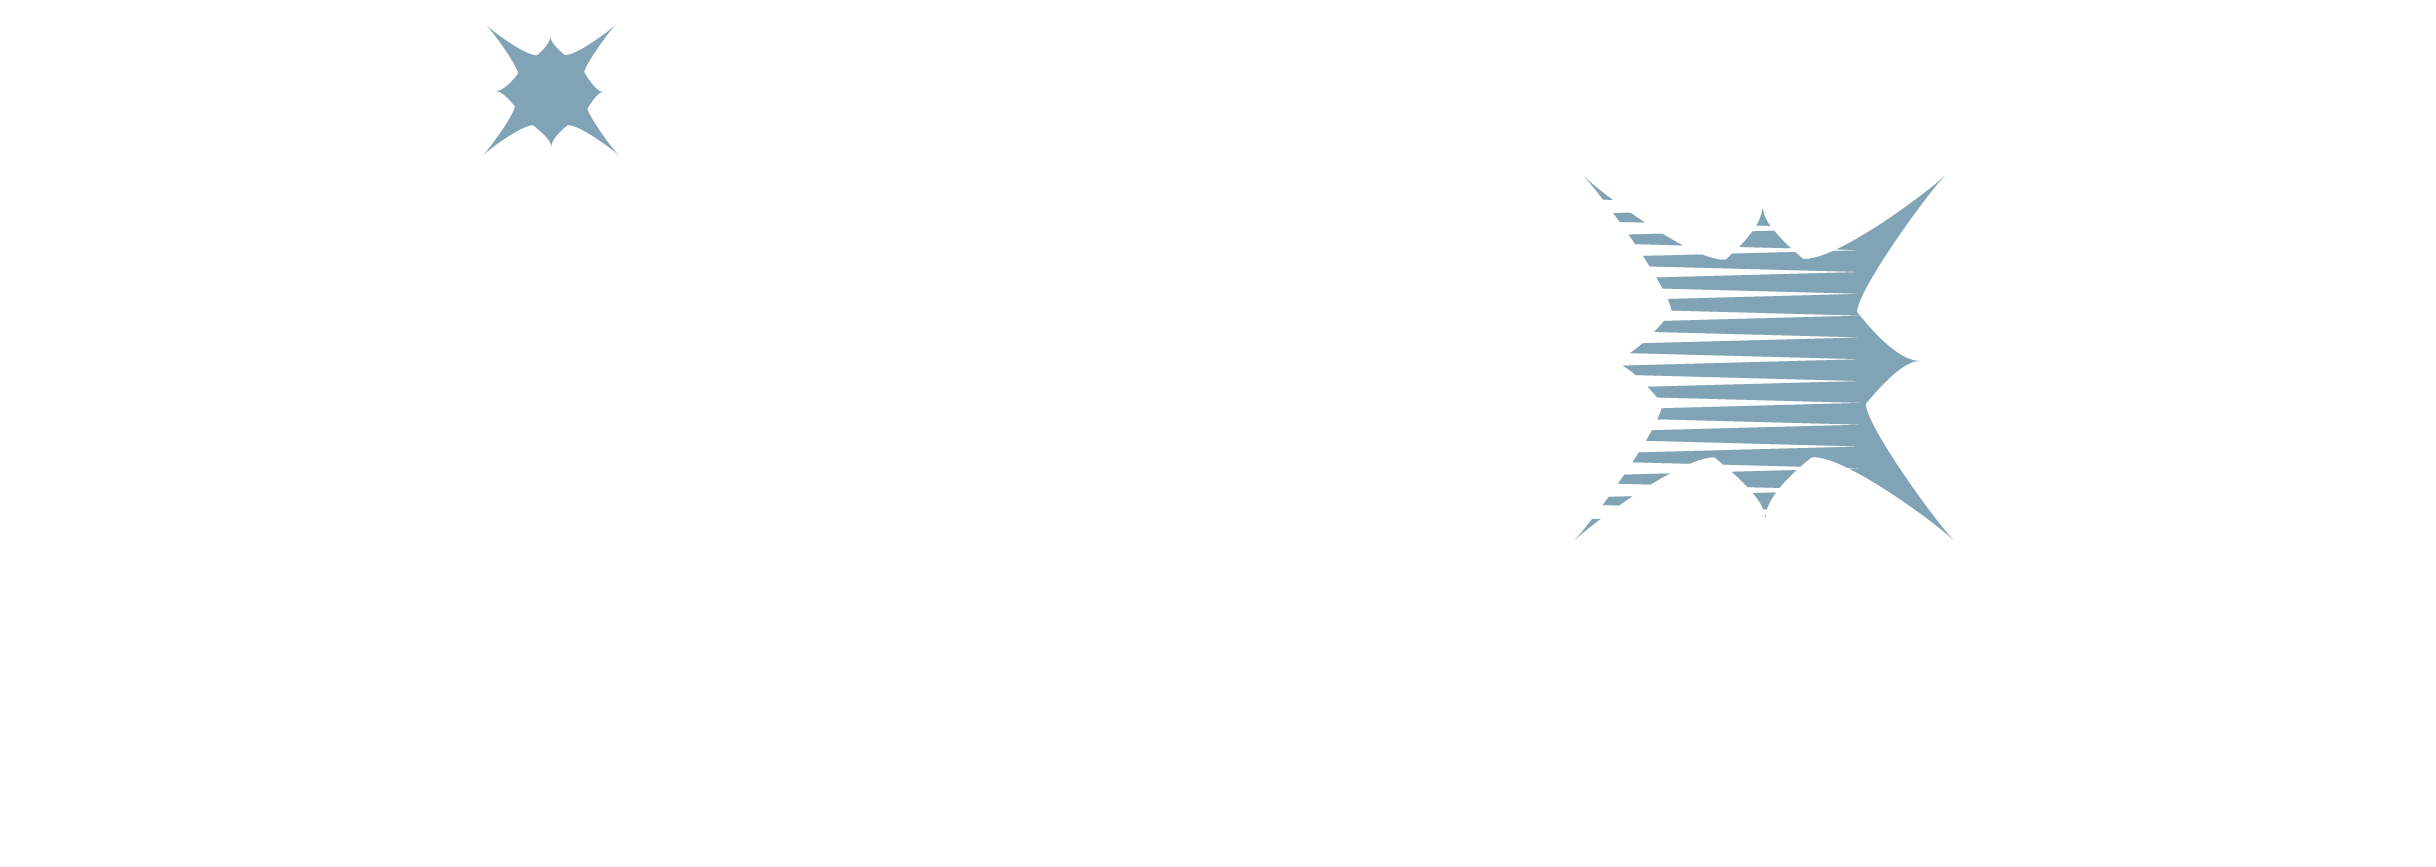 Jazz laser hair clinic logo